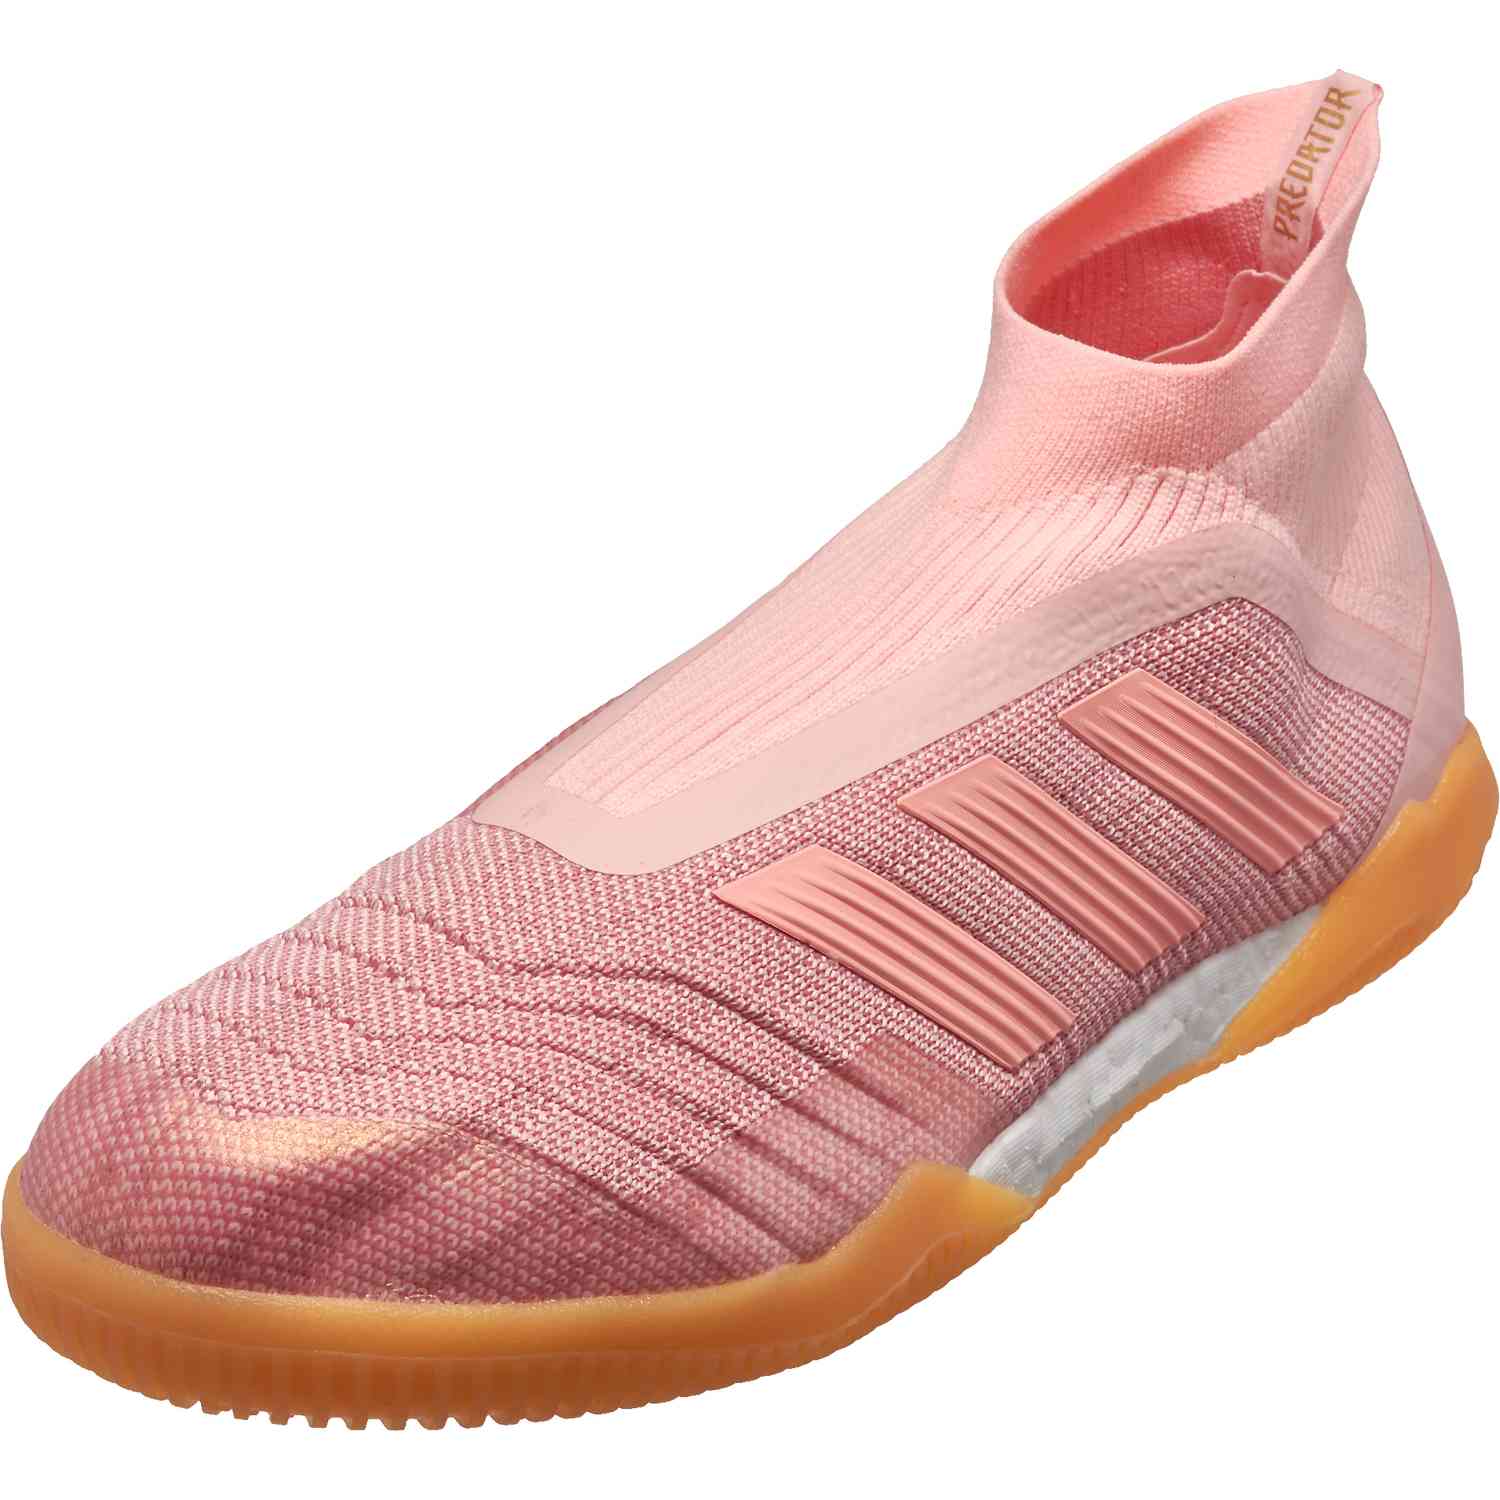 adidas predator pink 18.3